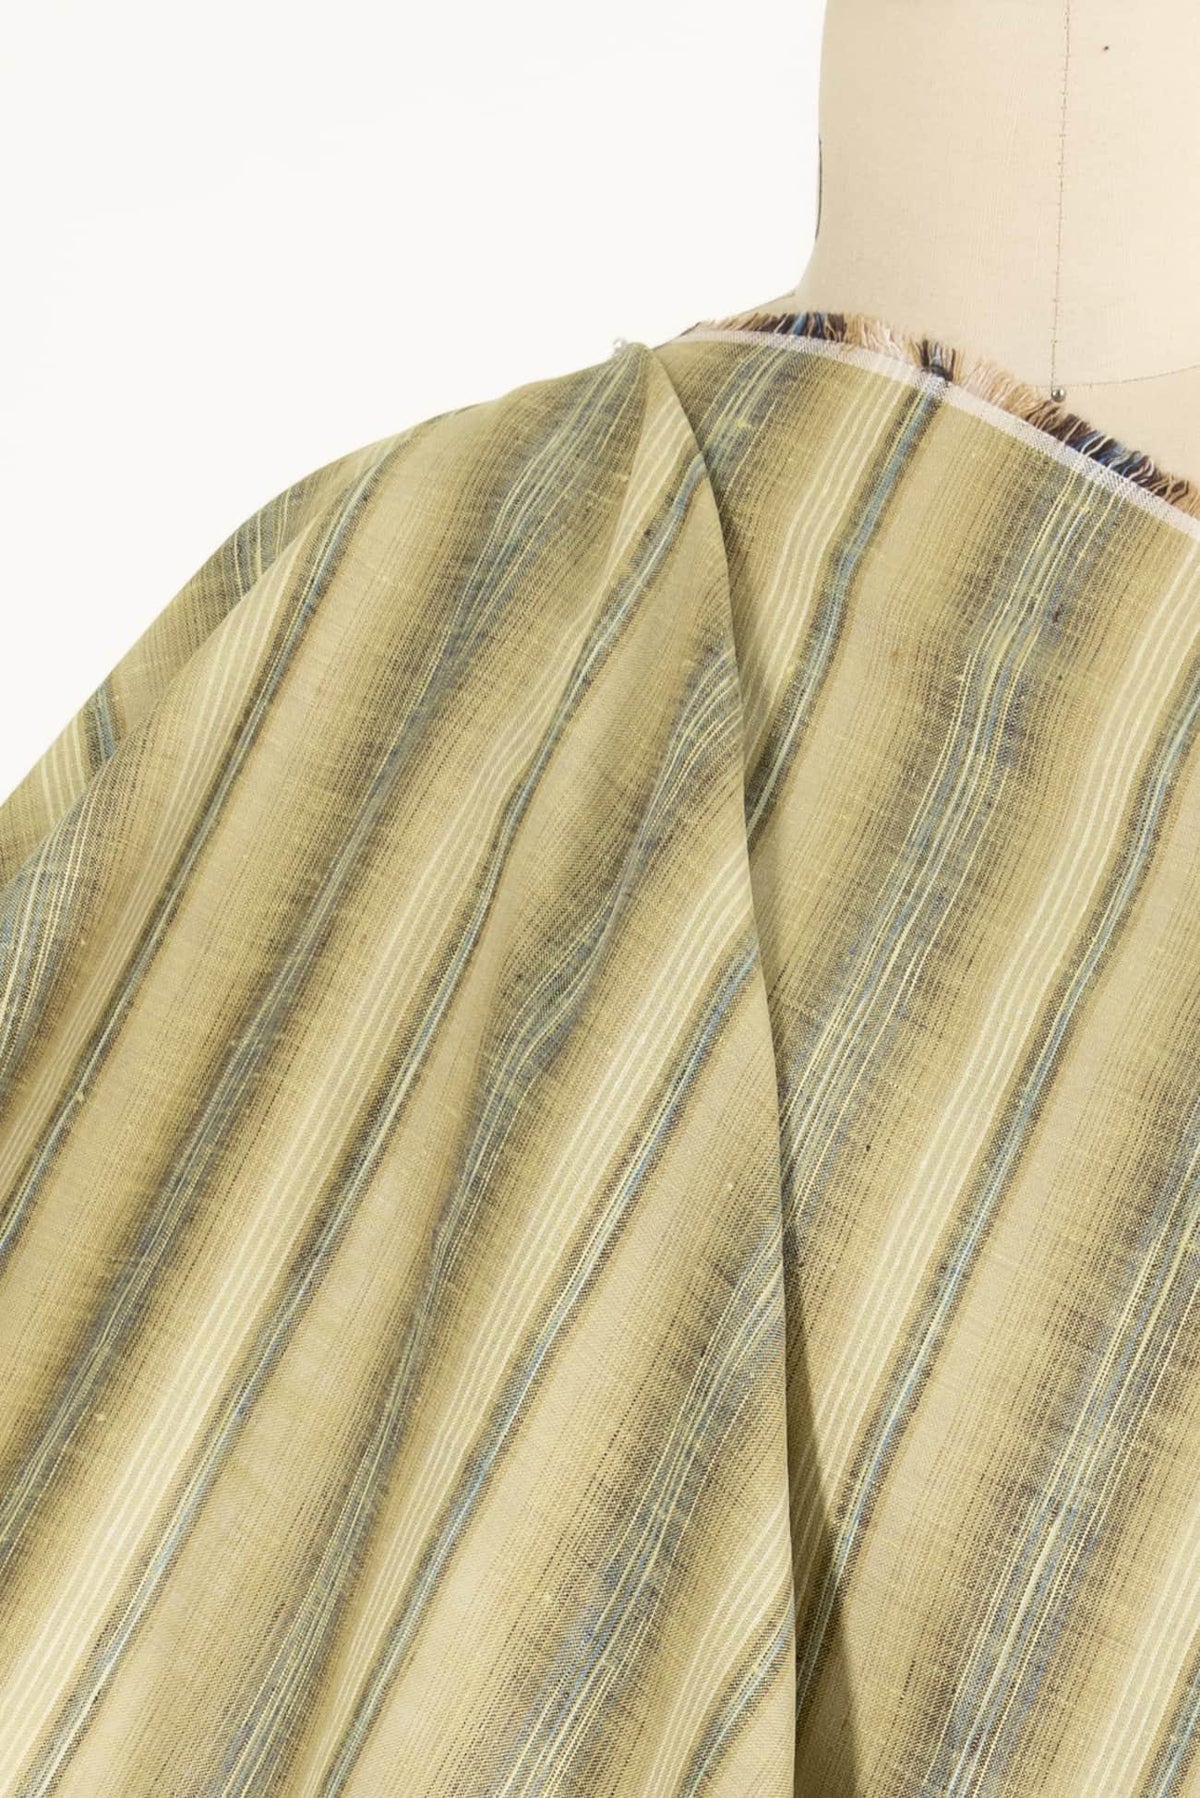 Green Pear Linen Woven - Marcy Tilton Fabrics